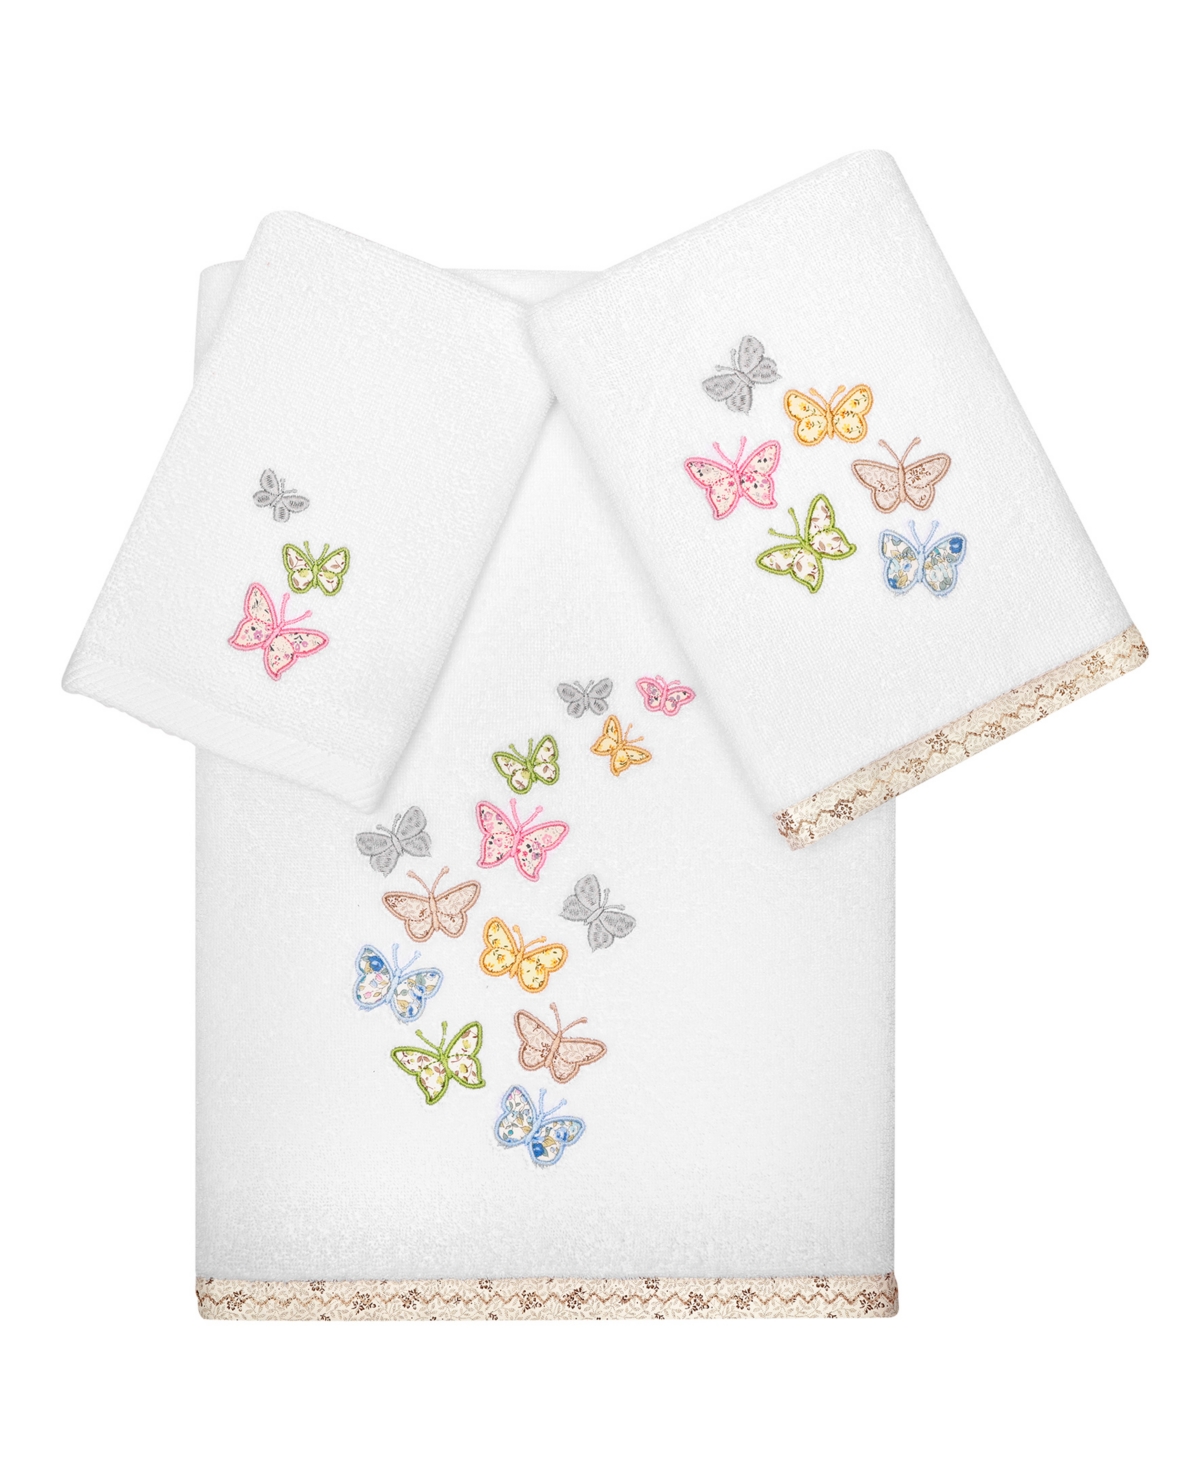 Linum Home Textiles Turkish Cotton Mariposa Embellished Towel Set, 3 Piece In White